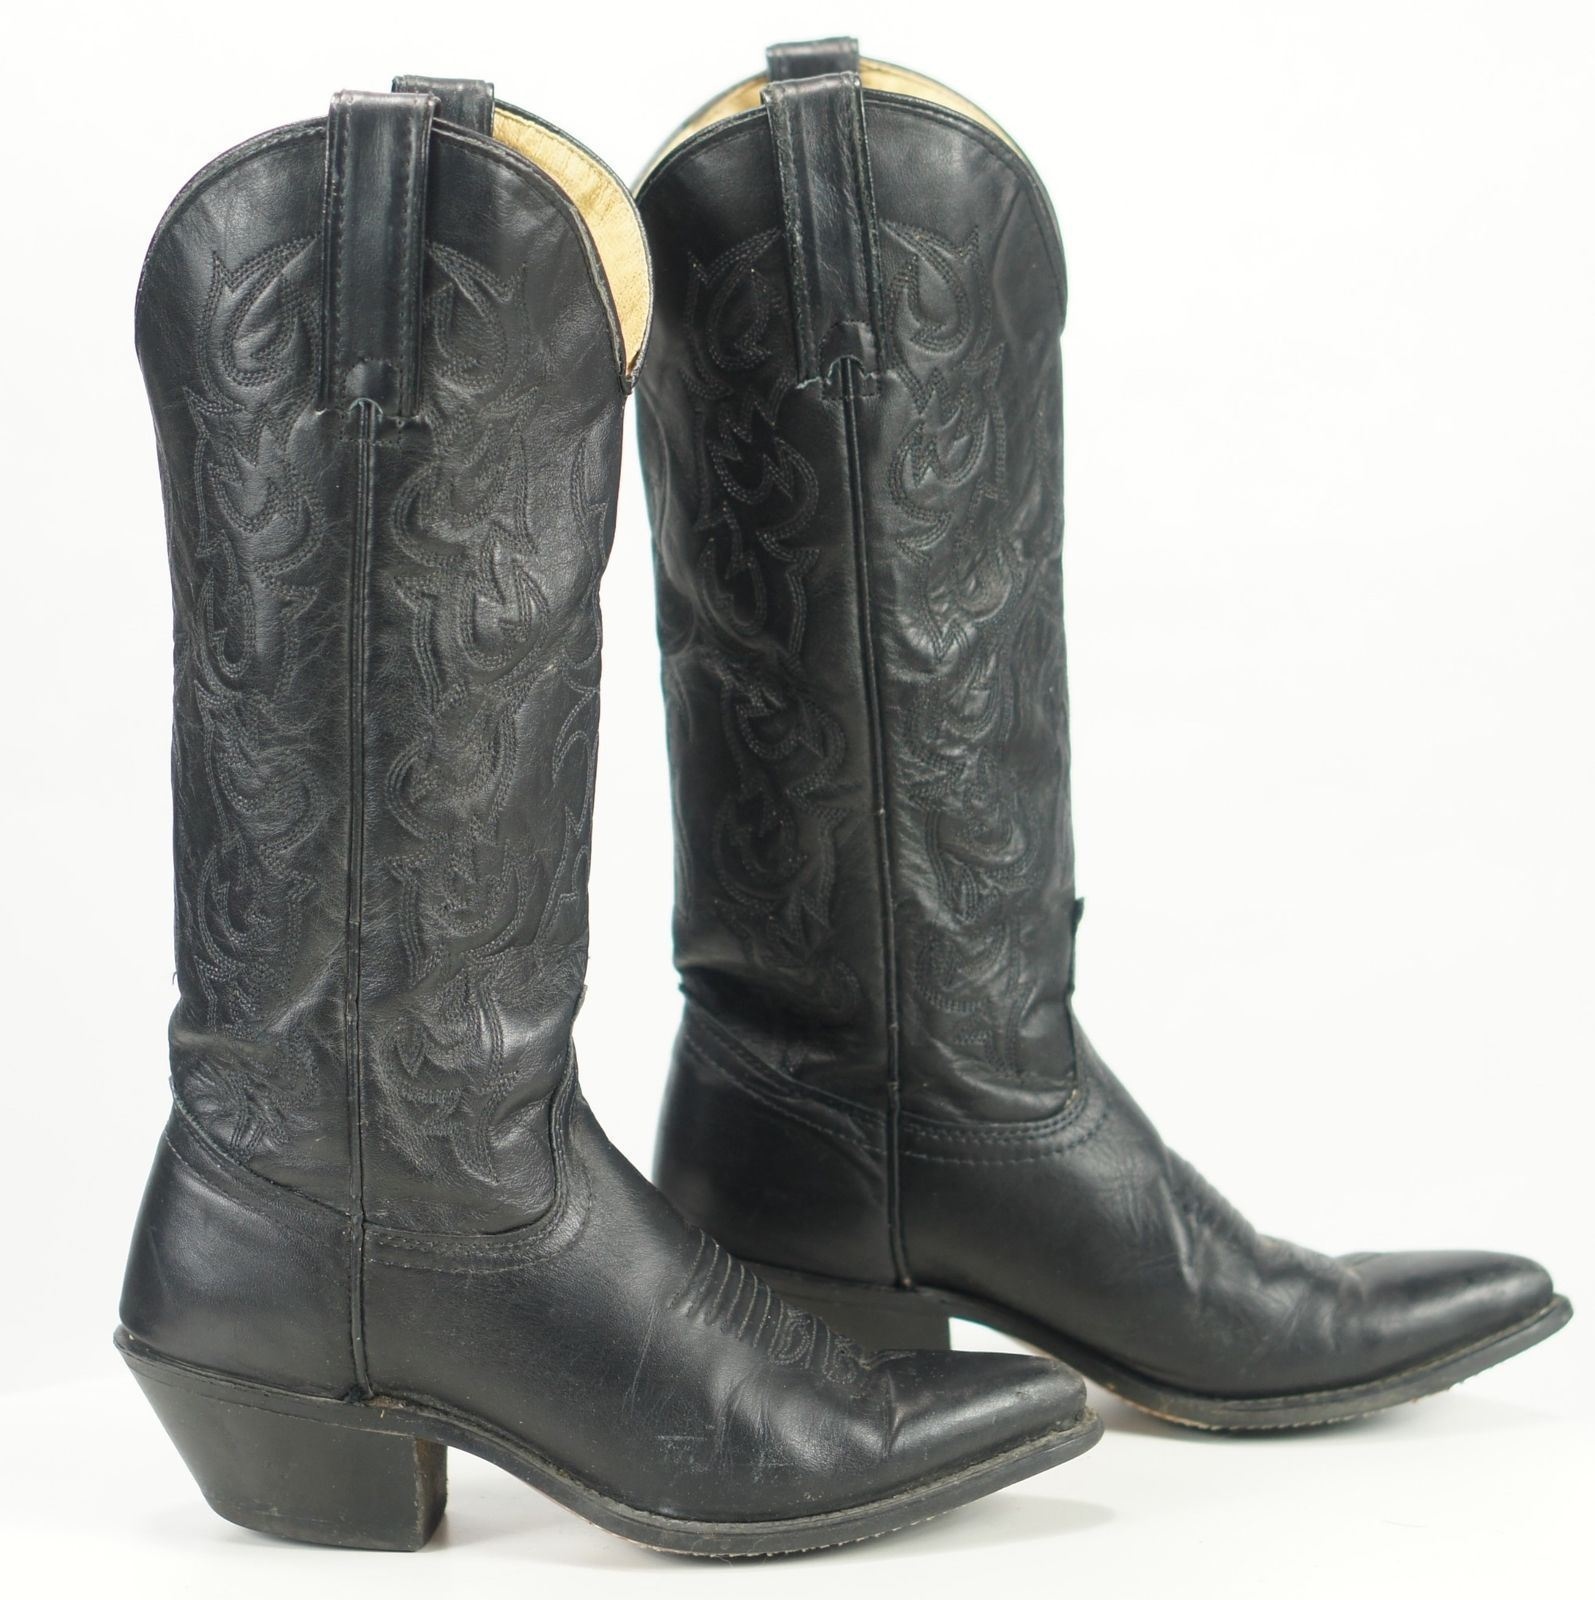 Wrangler Women's Western Cowboy Boots Black Boho Festival Vintage US Made 5 M